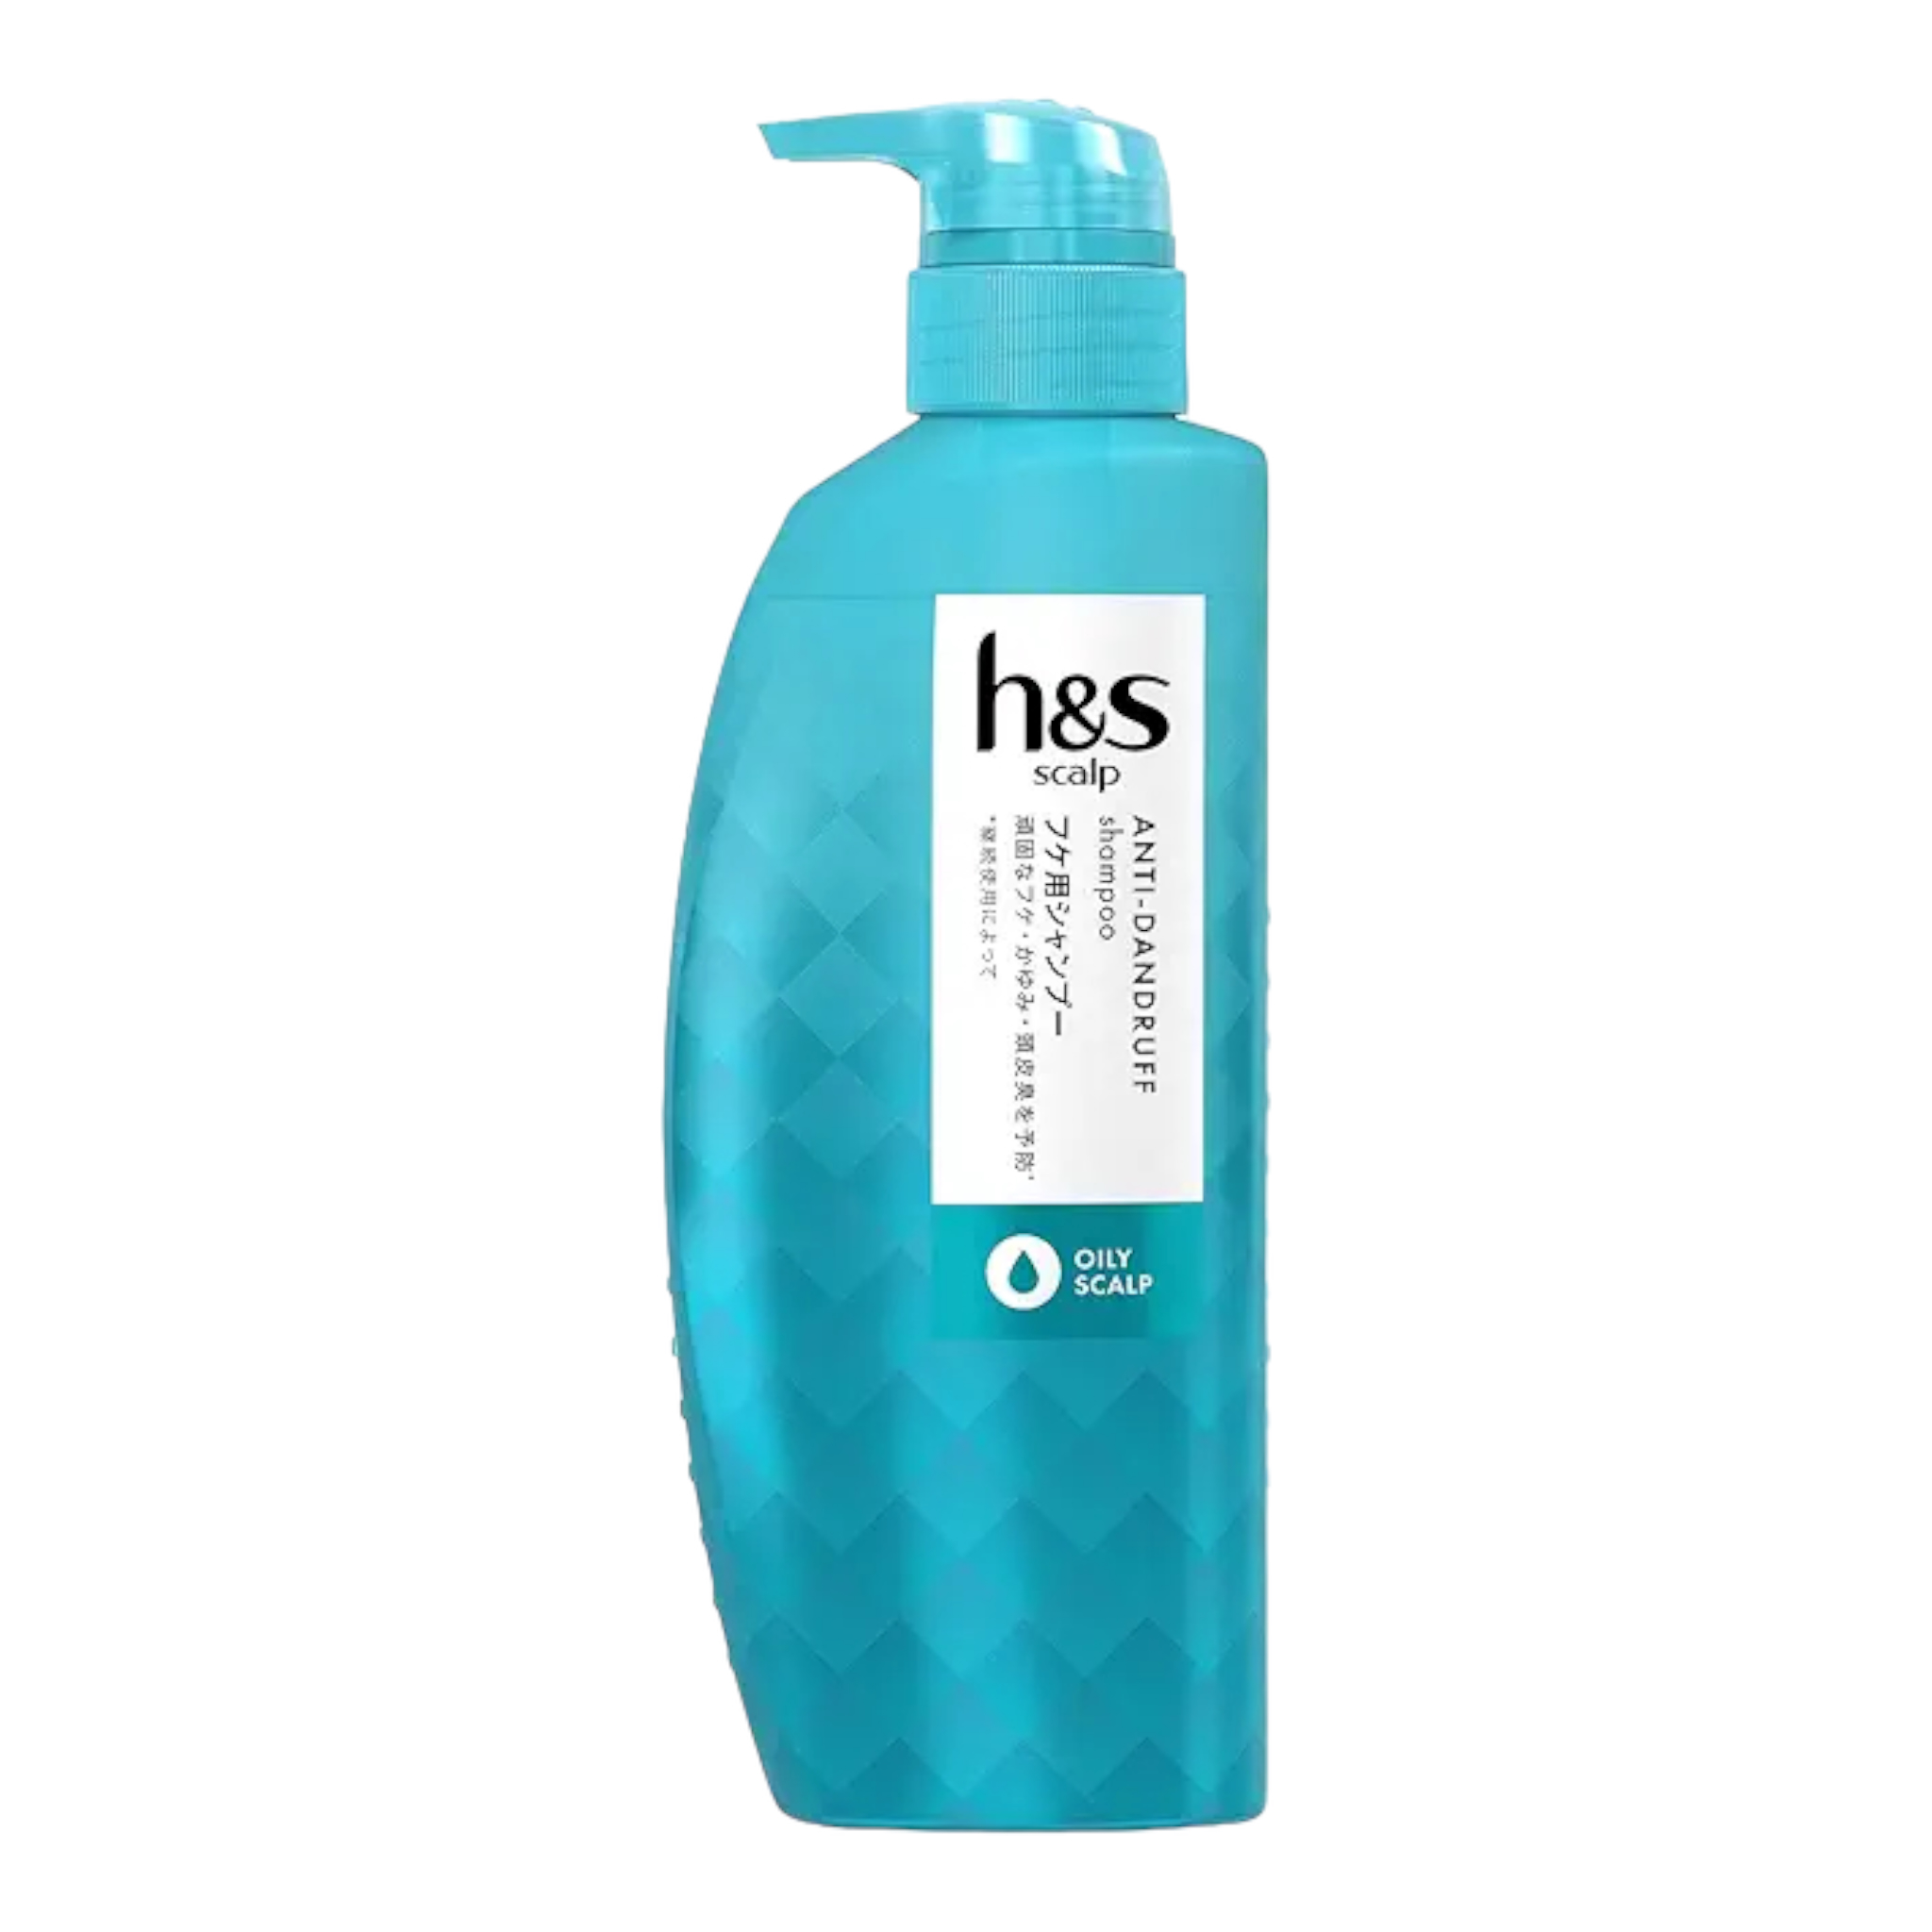 h&s(エイチアンドエス) scalp スカルプ オイリー 脂性頭皮用  ノンシリコンメンズ シャンプー